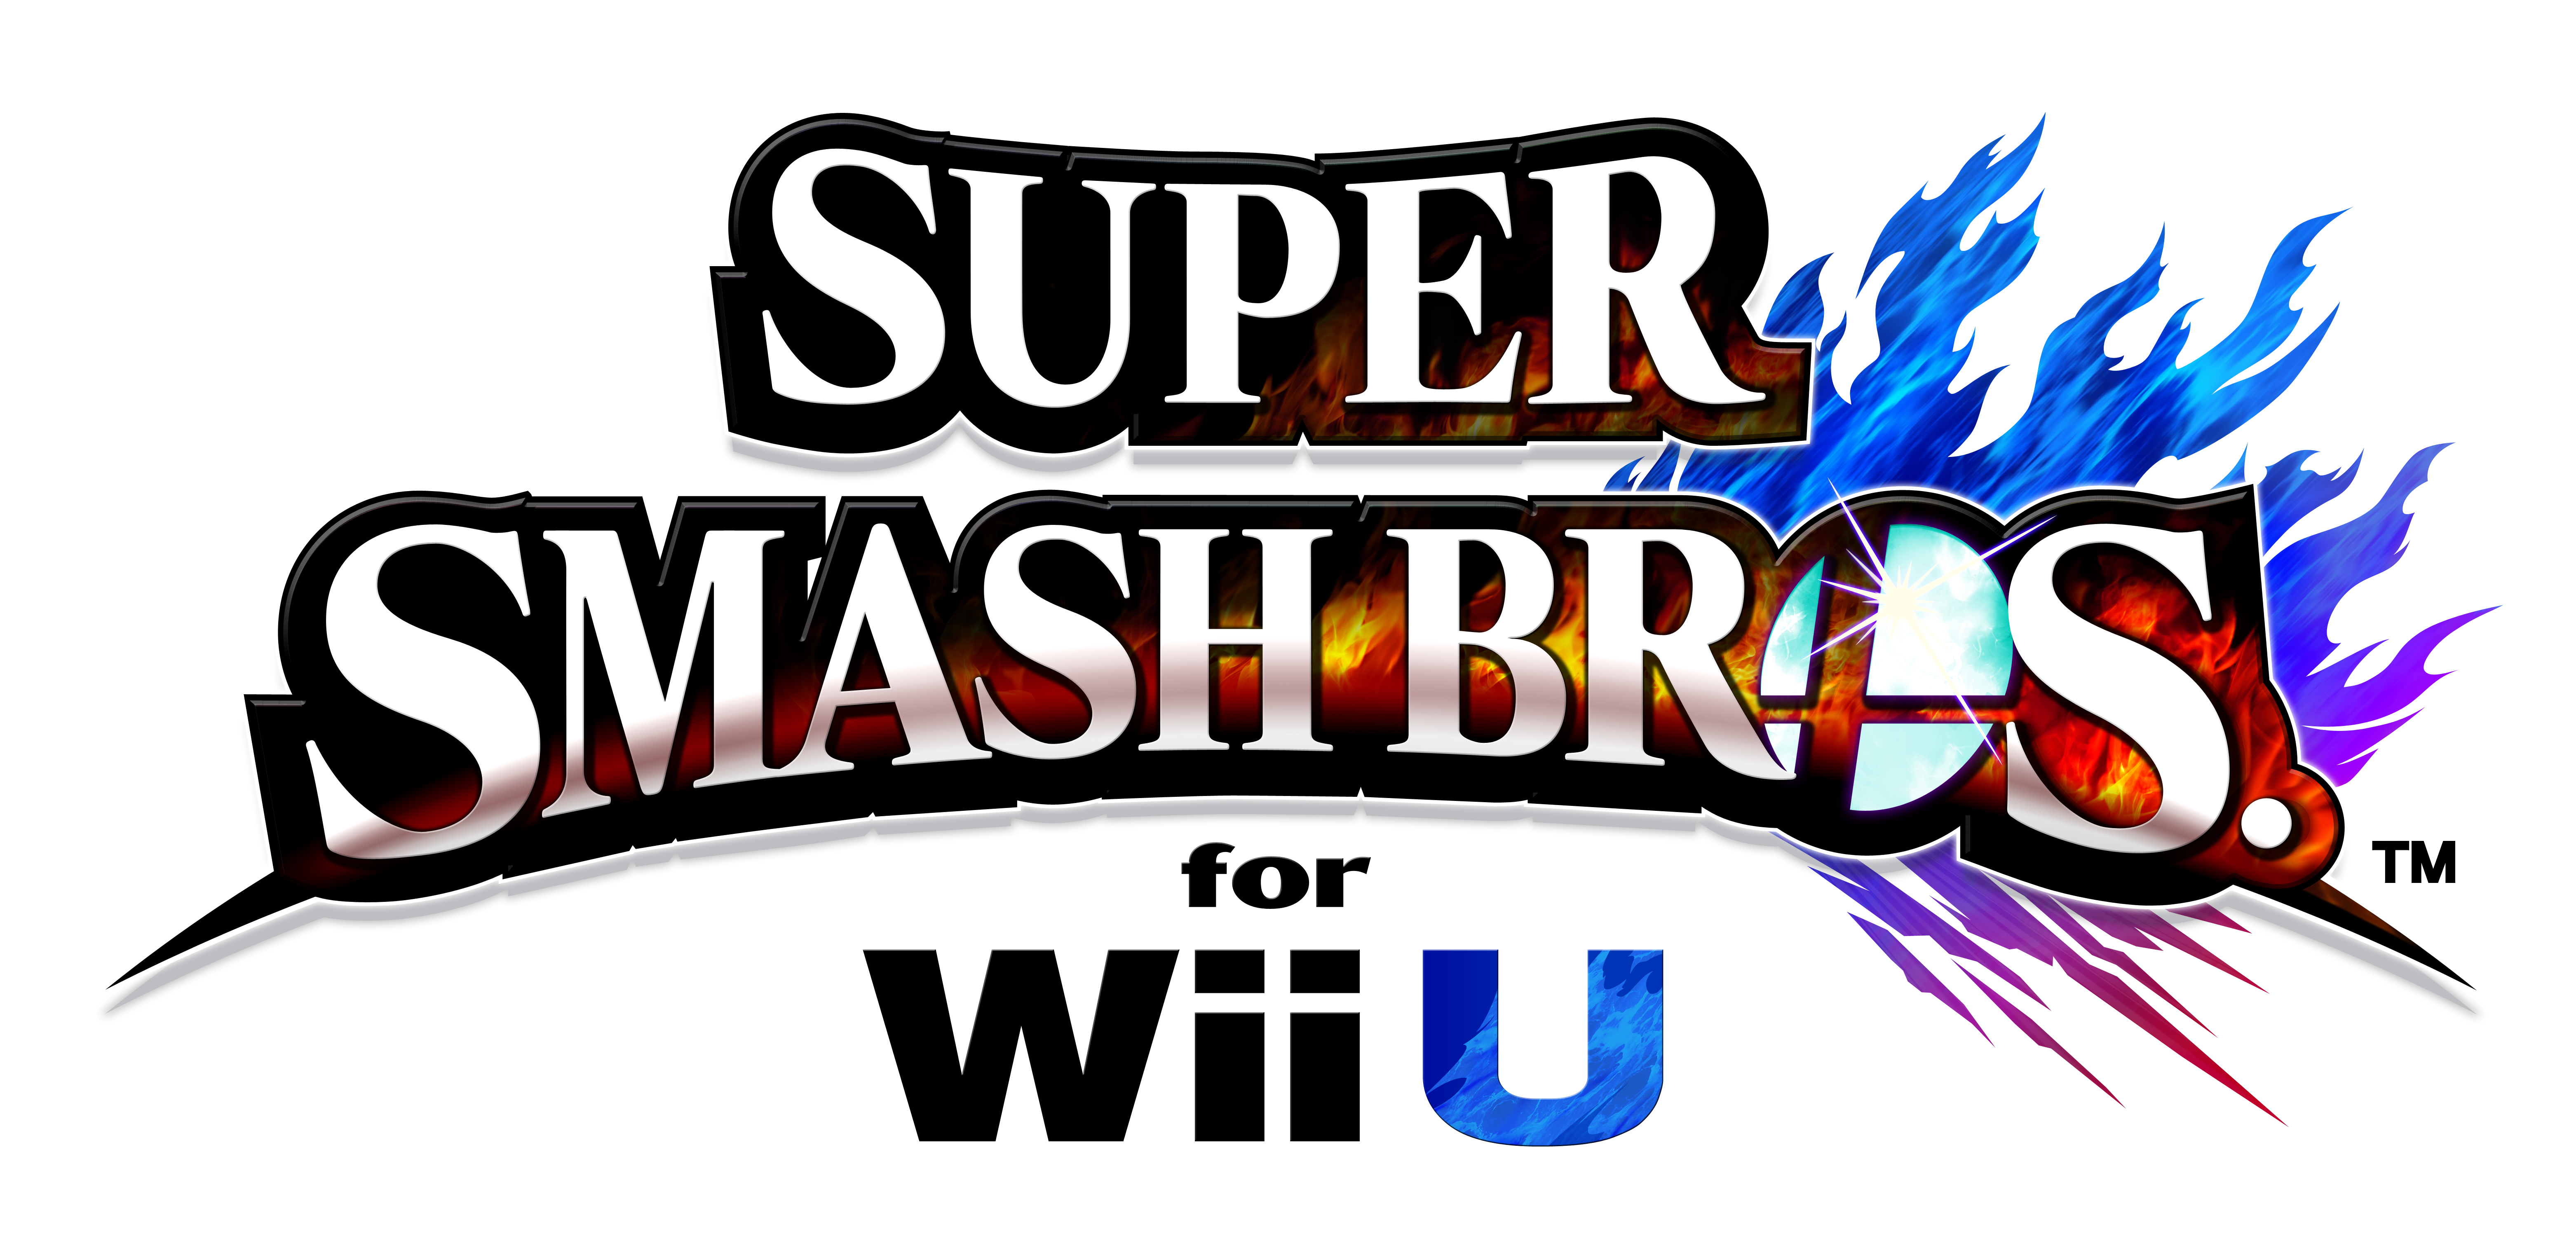 Artwork and renders - Super Smash Bros. for Nintendo 3DS / Wii U